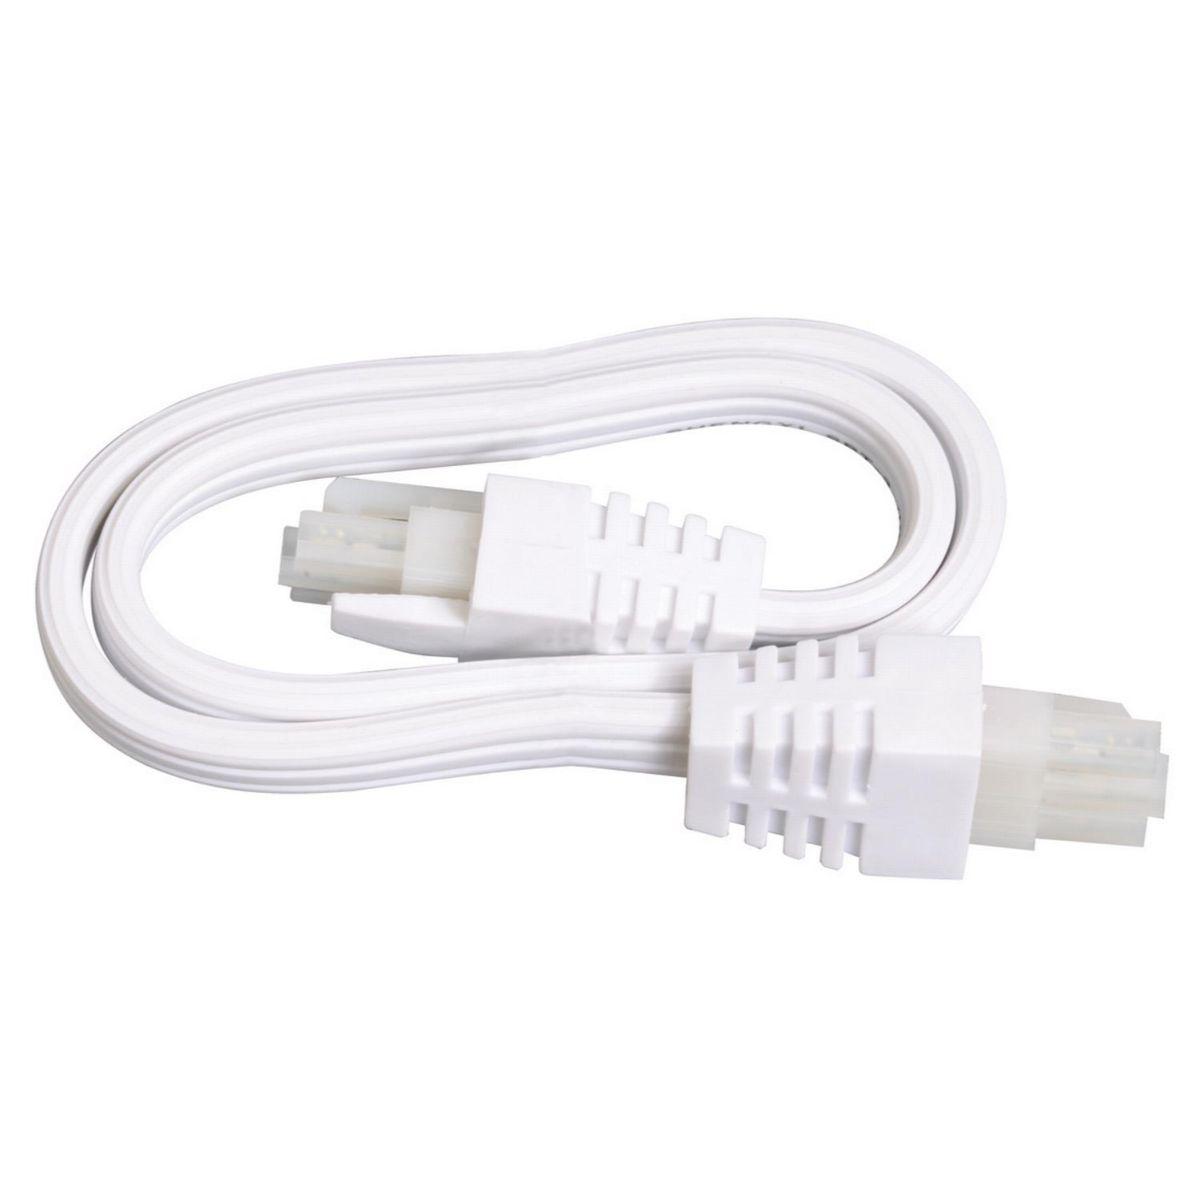 72in. Interconnect Cord for Elena Task Lighting, White